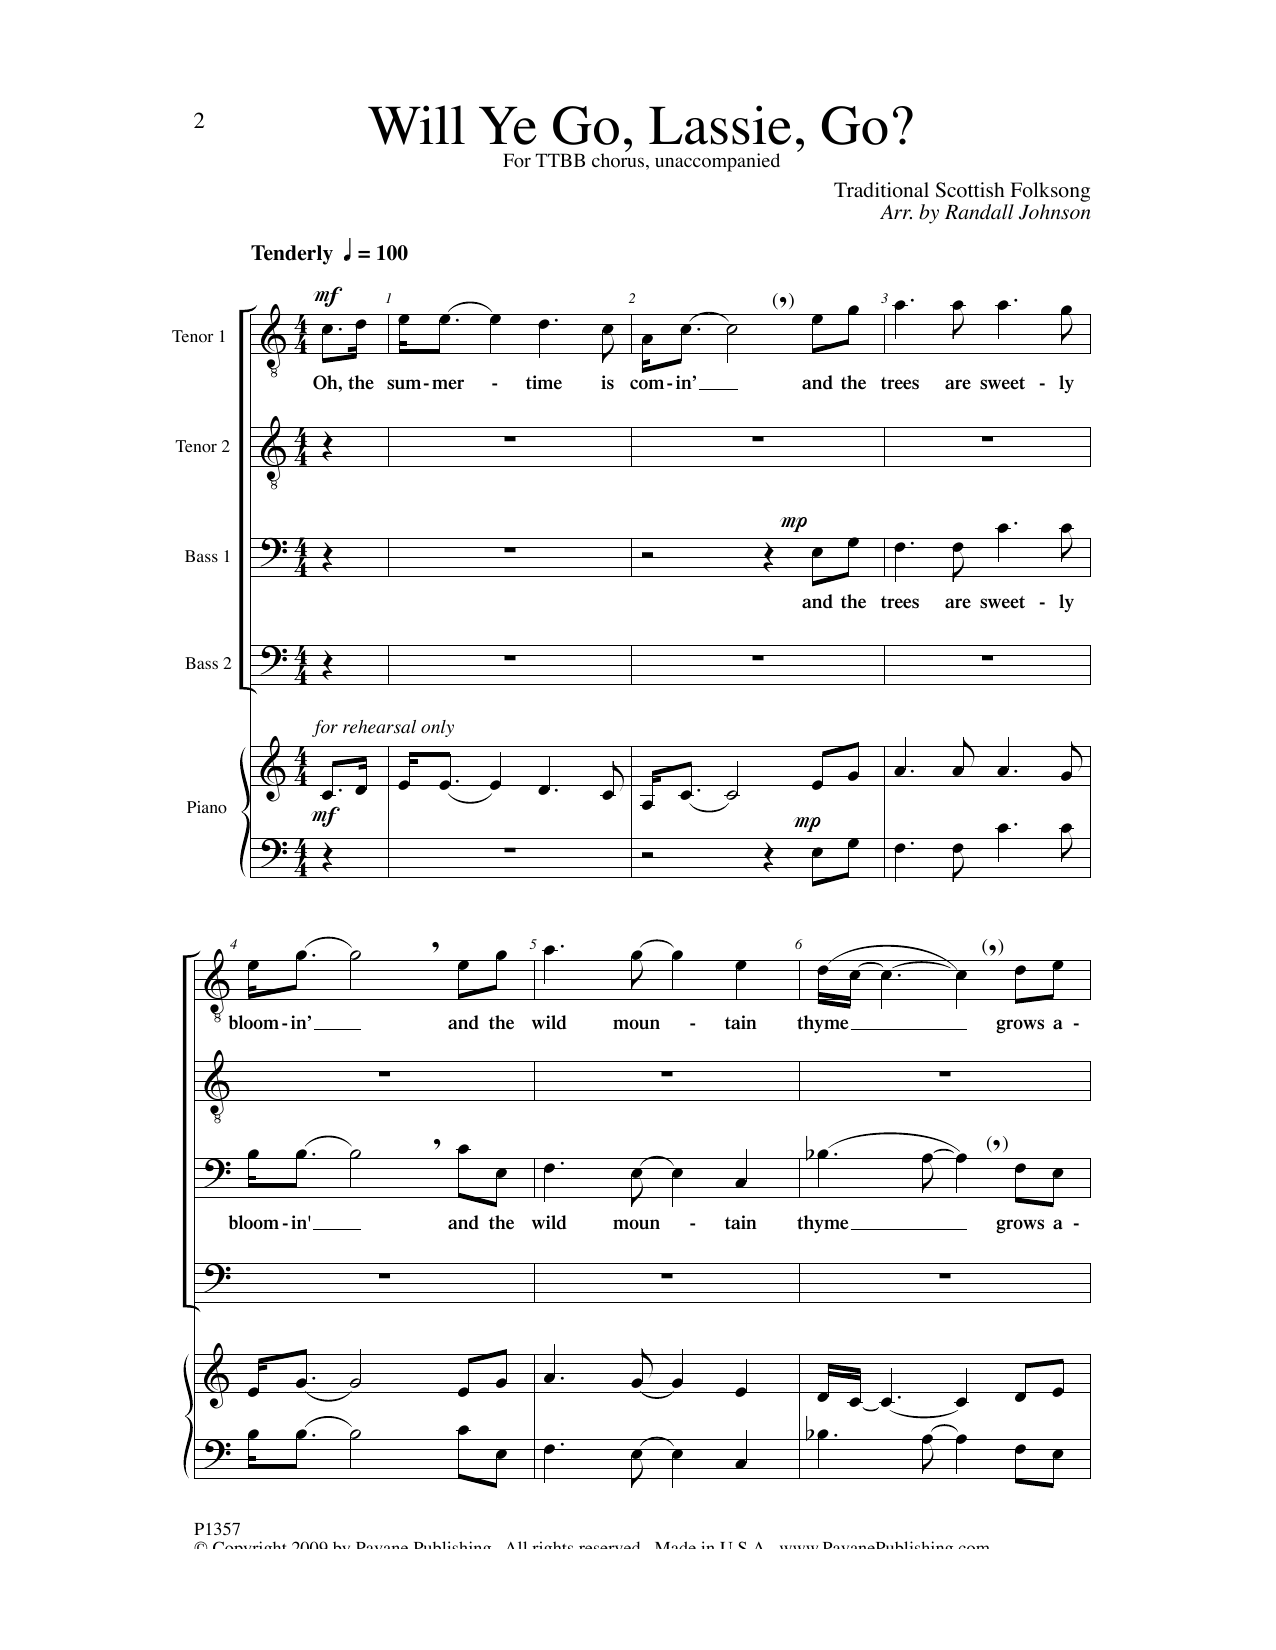 Randall Johnson Will Ye Go, Lassie, Go? Sheet Music Notes & Chords for TTBB Choir - Download or Print PDF